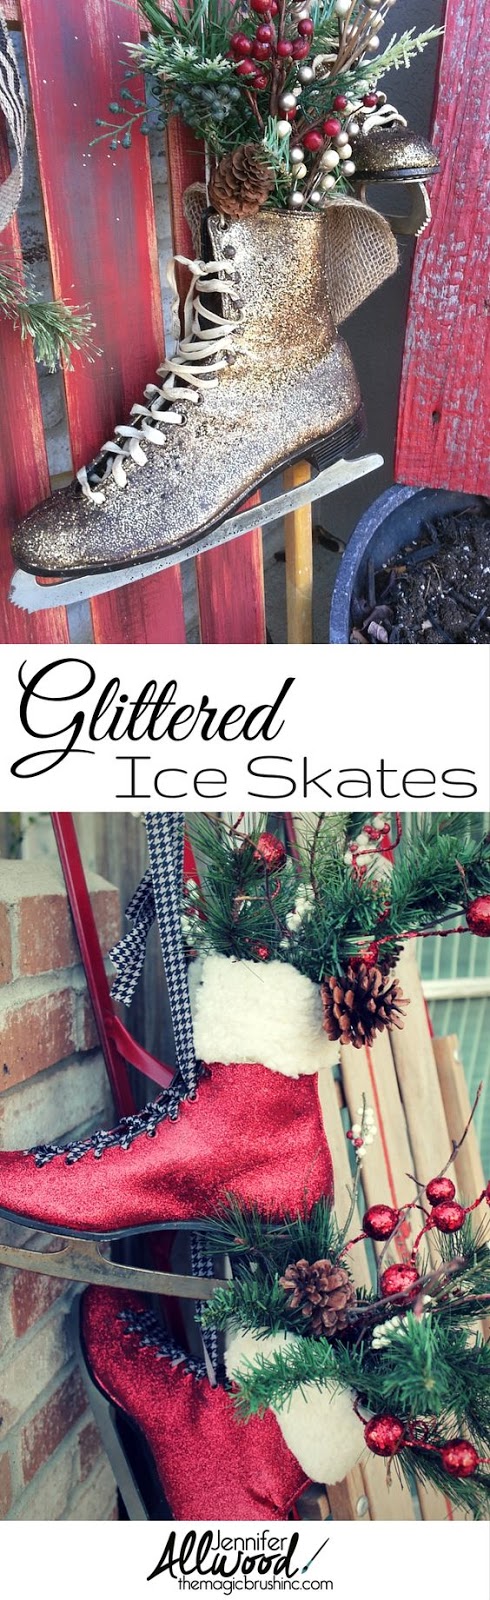 Glittered ice skates are taking over Christmas decor!